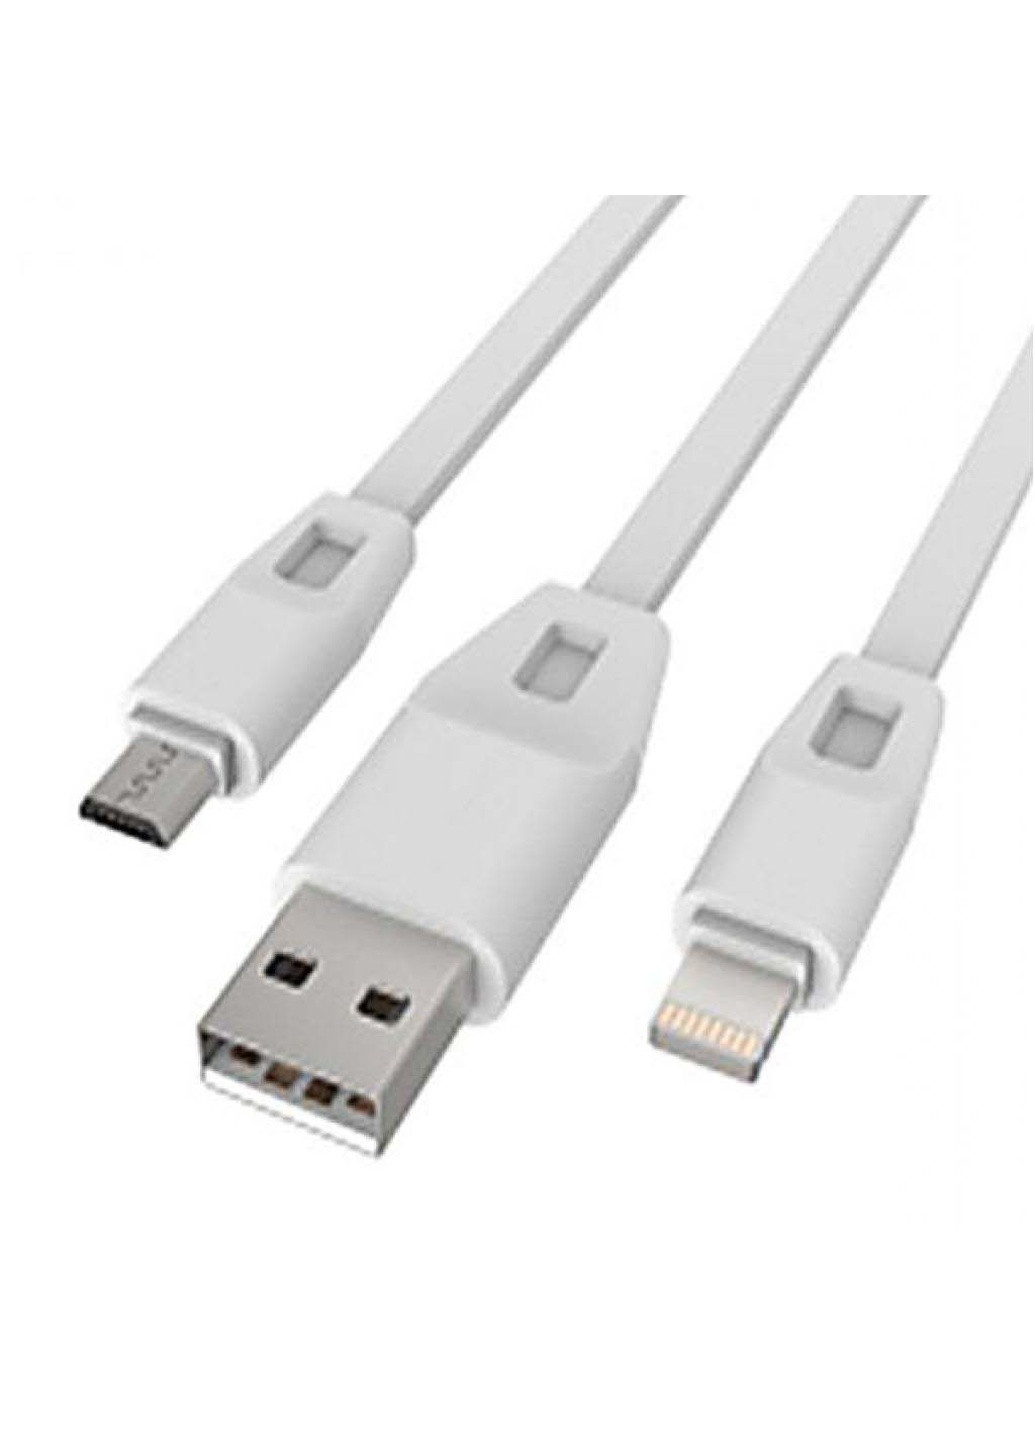 Дата кабель USB 2.0 - Micro USB / Lightning 2А (DR-+1622) (White) 1,0м (219092) Drobak usb 2.0 - micro usb/lightning 2а (dr-1622) (white) (239381248)